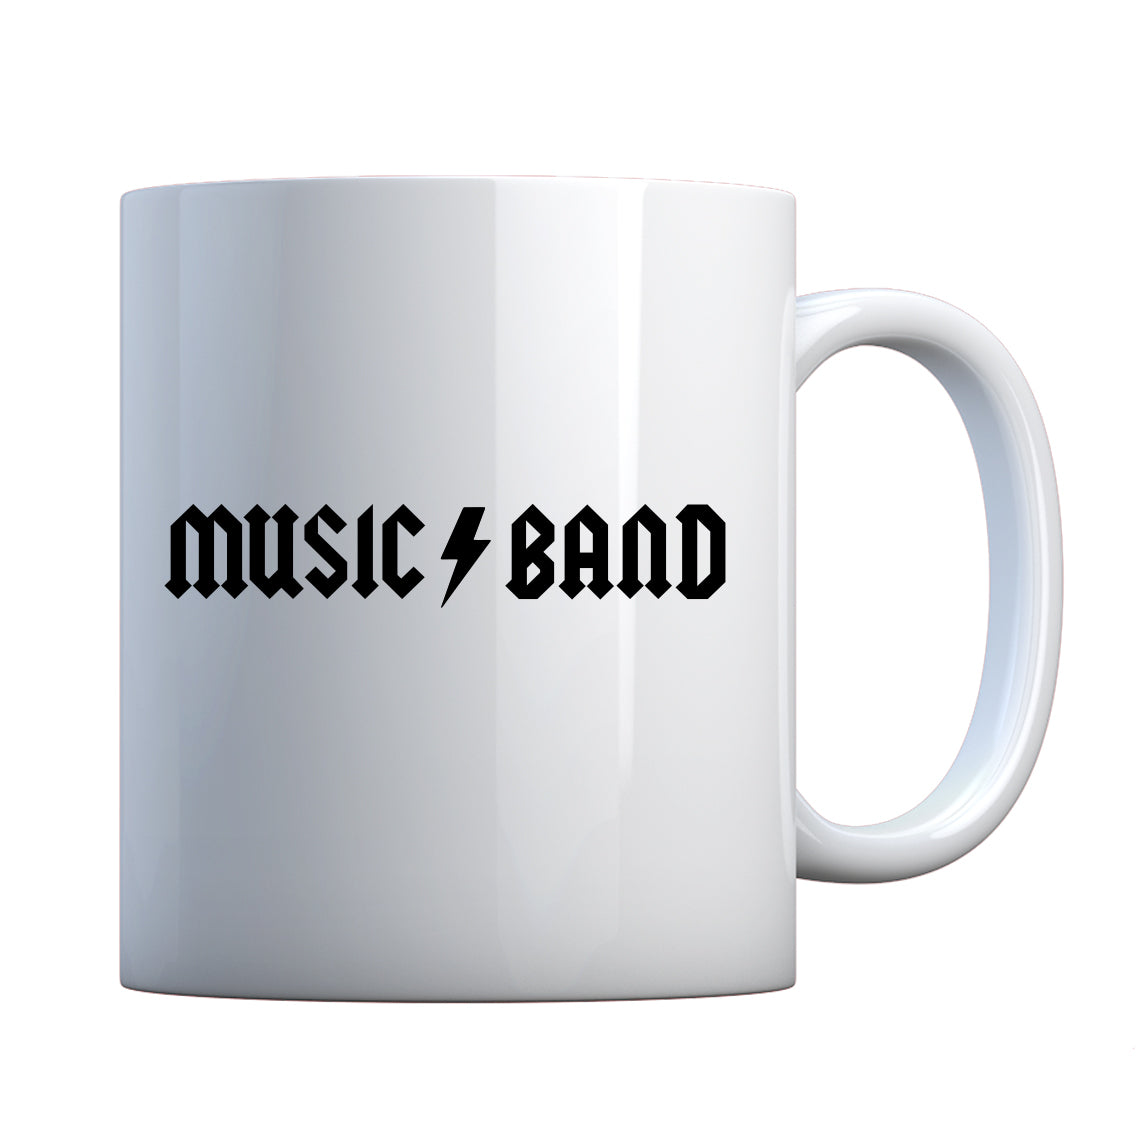 Mug Music Band Ceramic Gift Mug